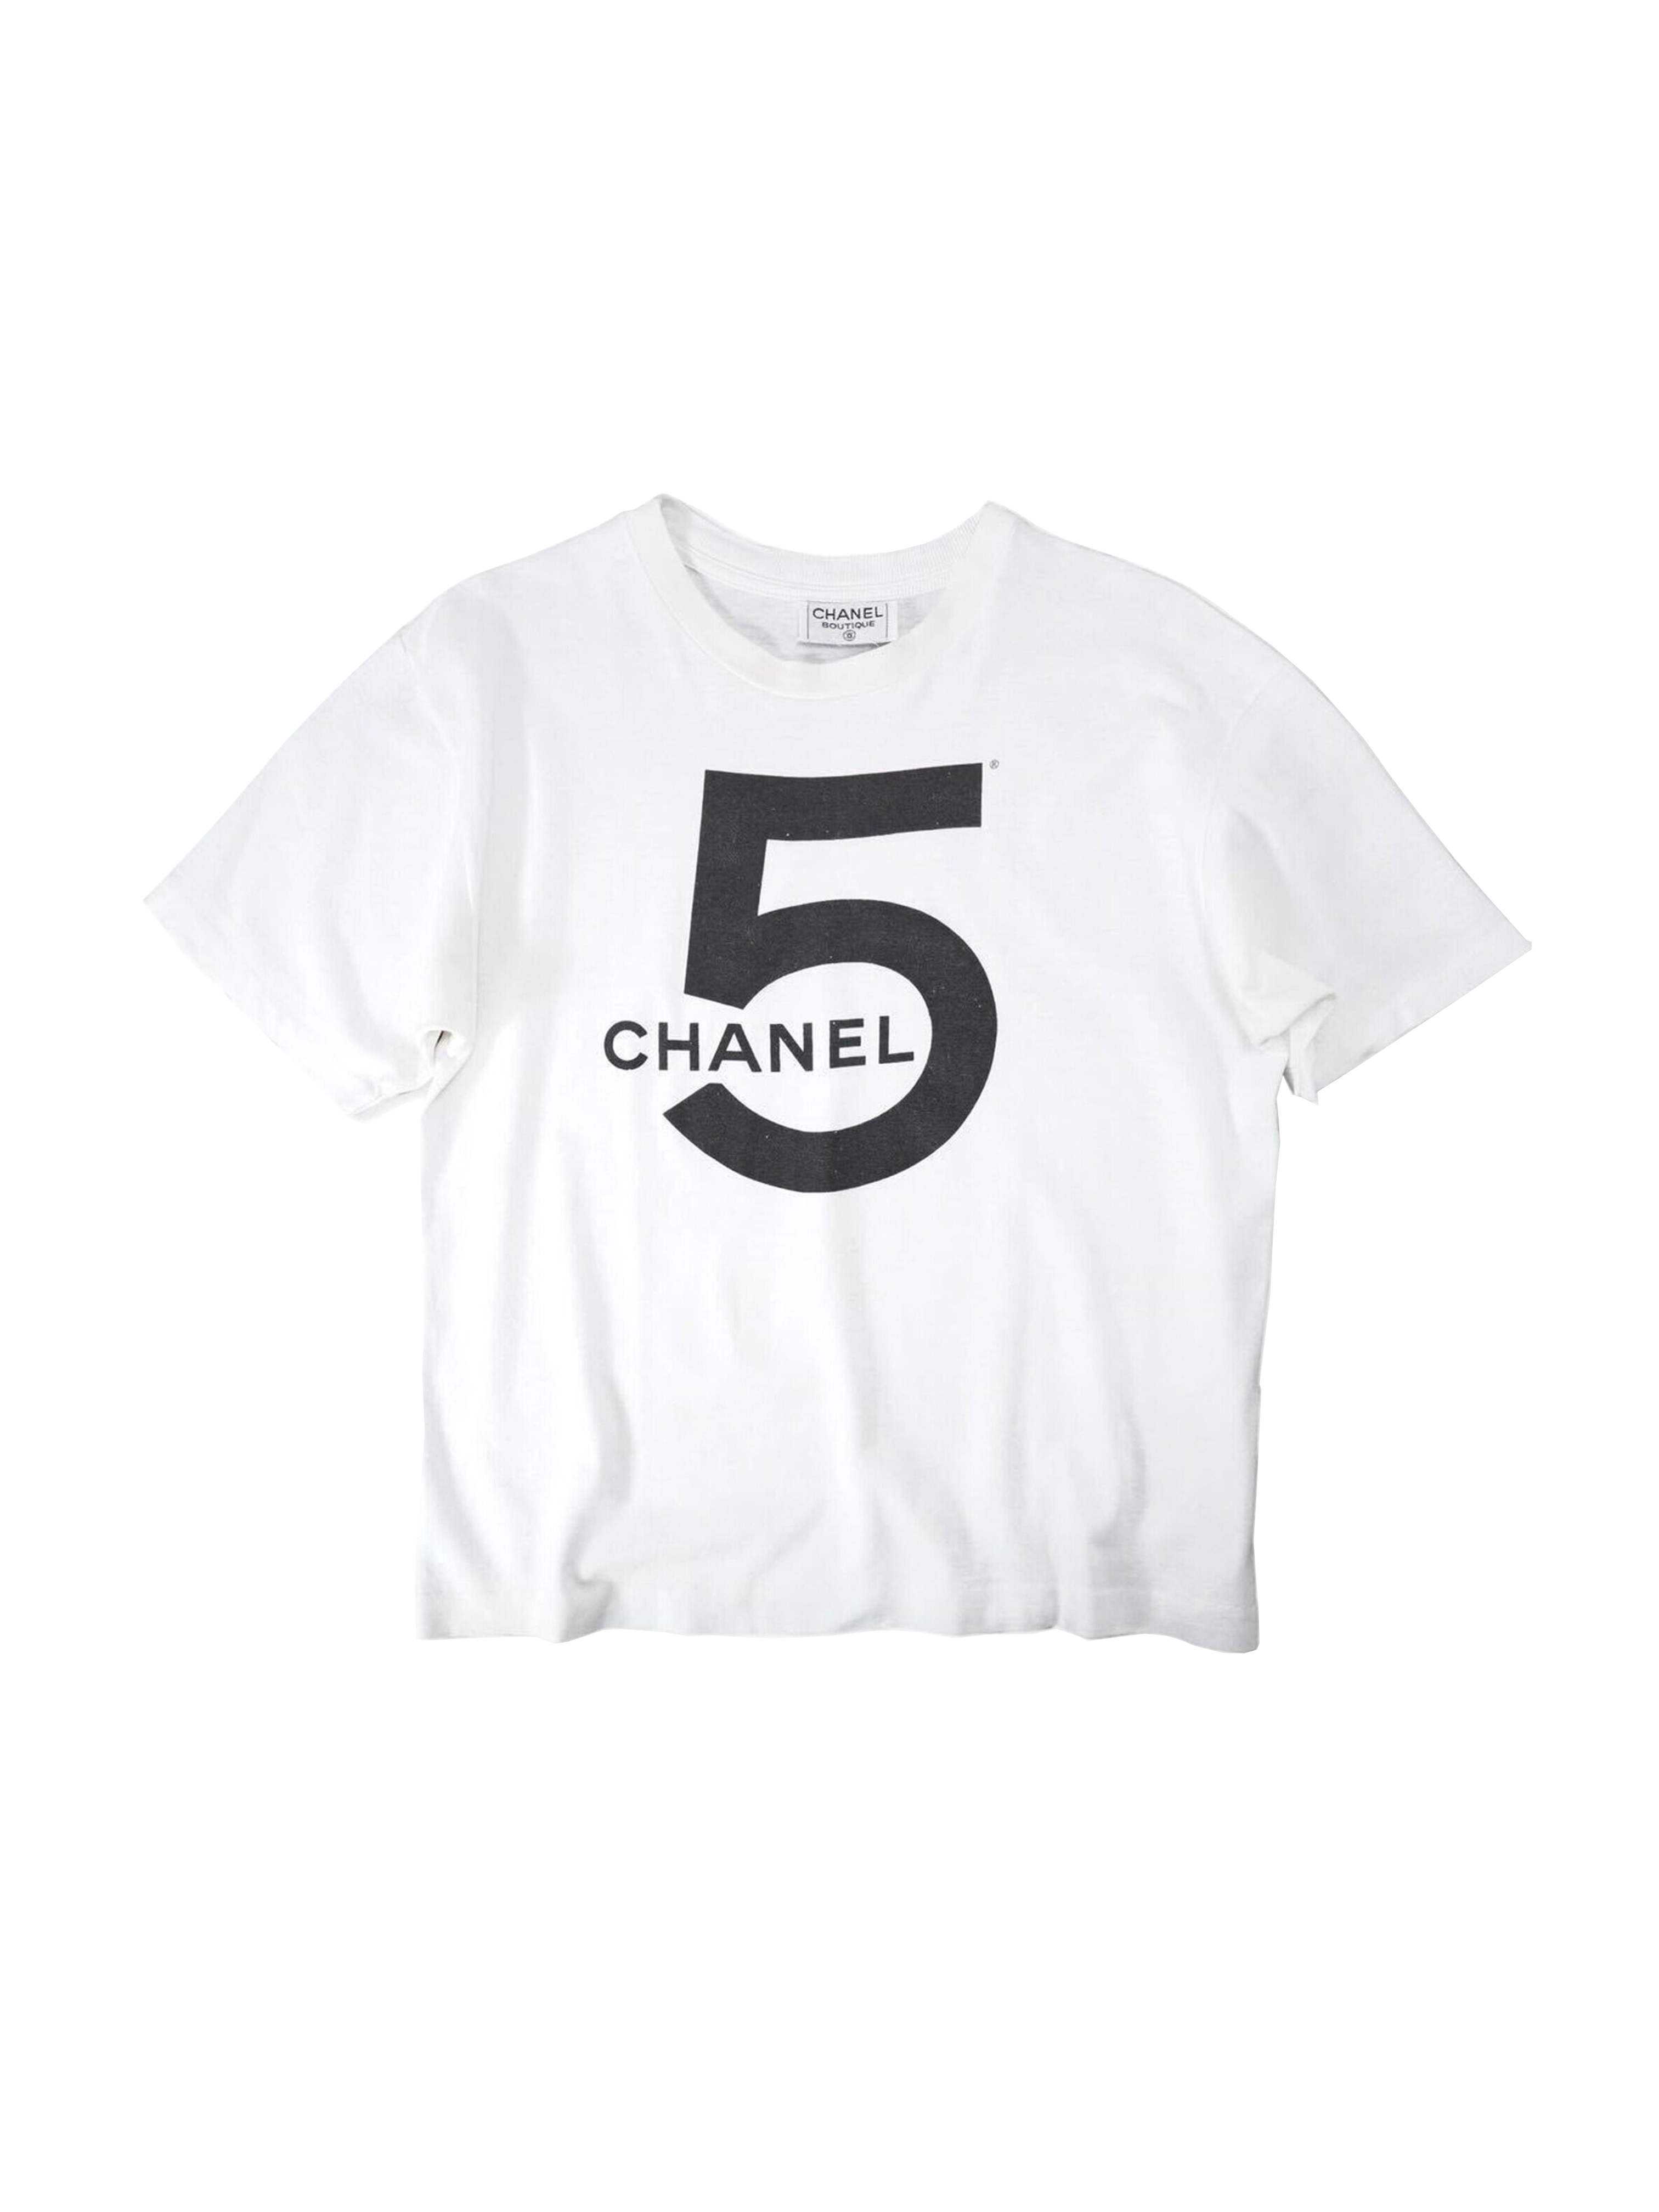 Chanel Just a Drop of No. 5 Sweatshirt